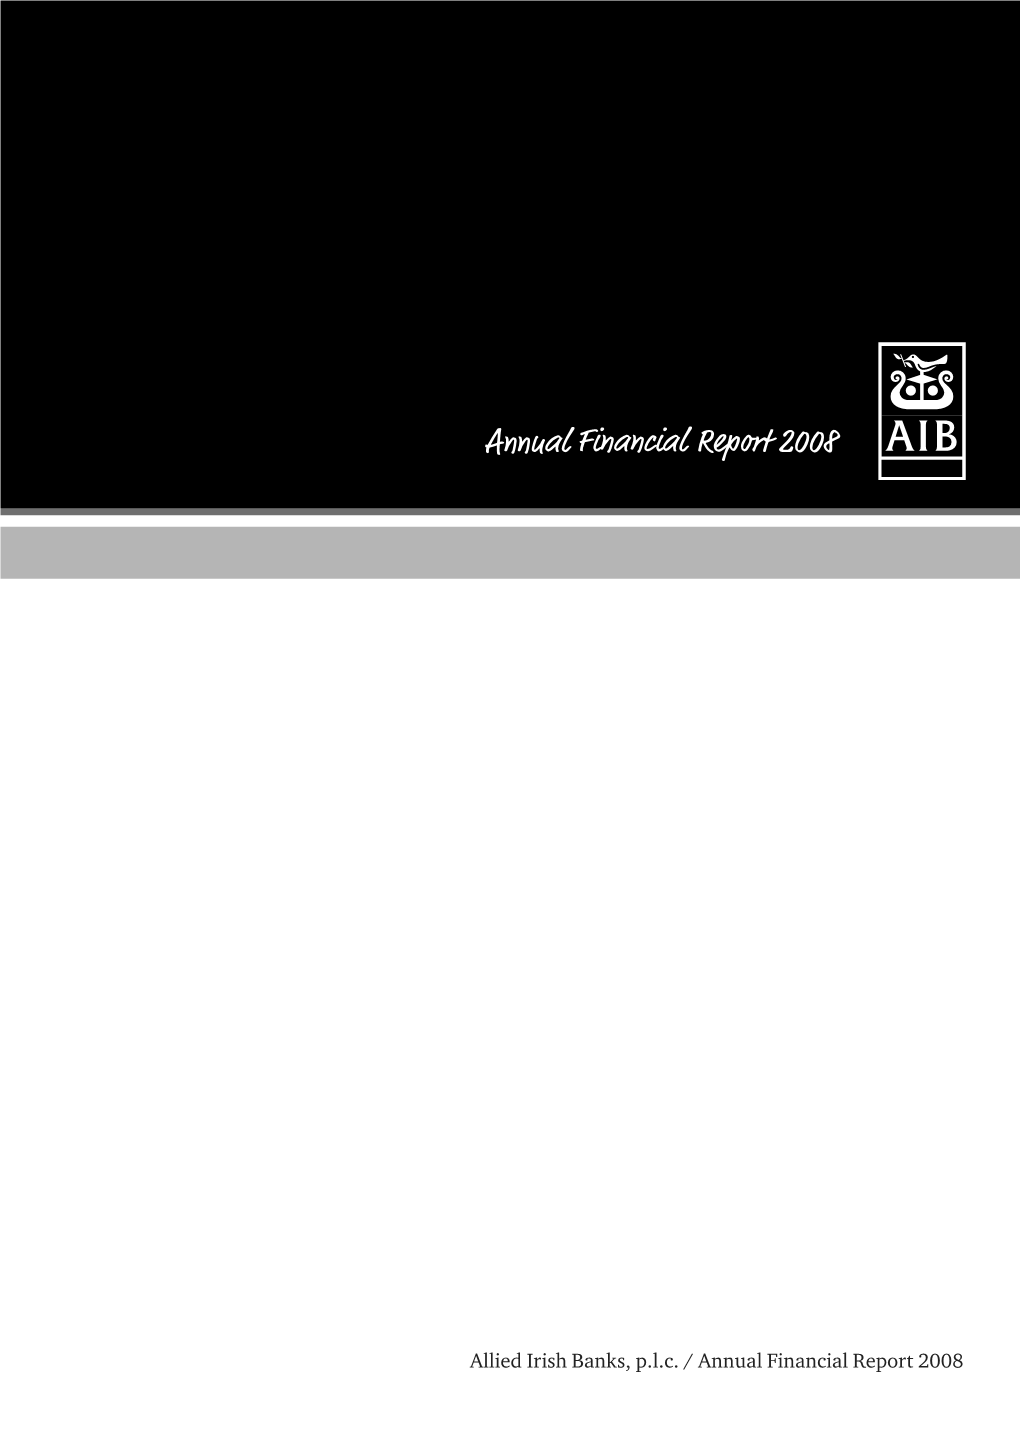 Annual-Financial-Report-2009.Pdf